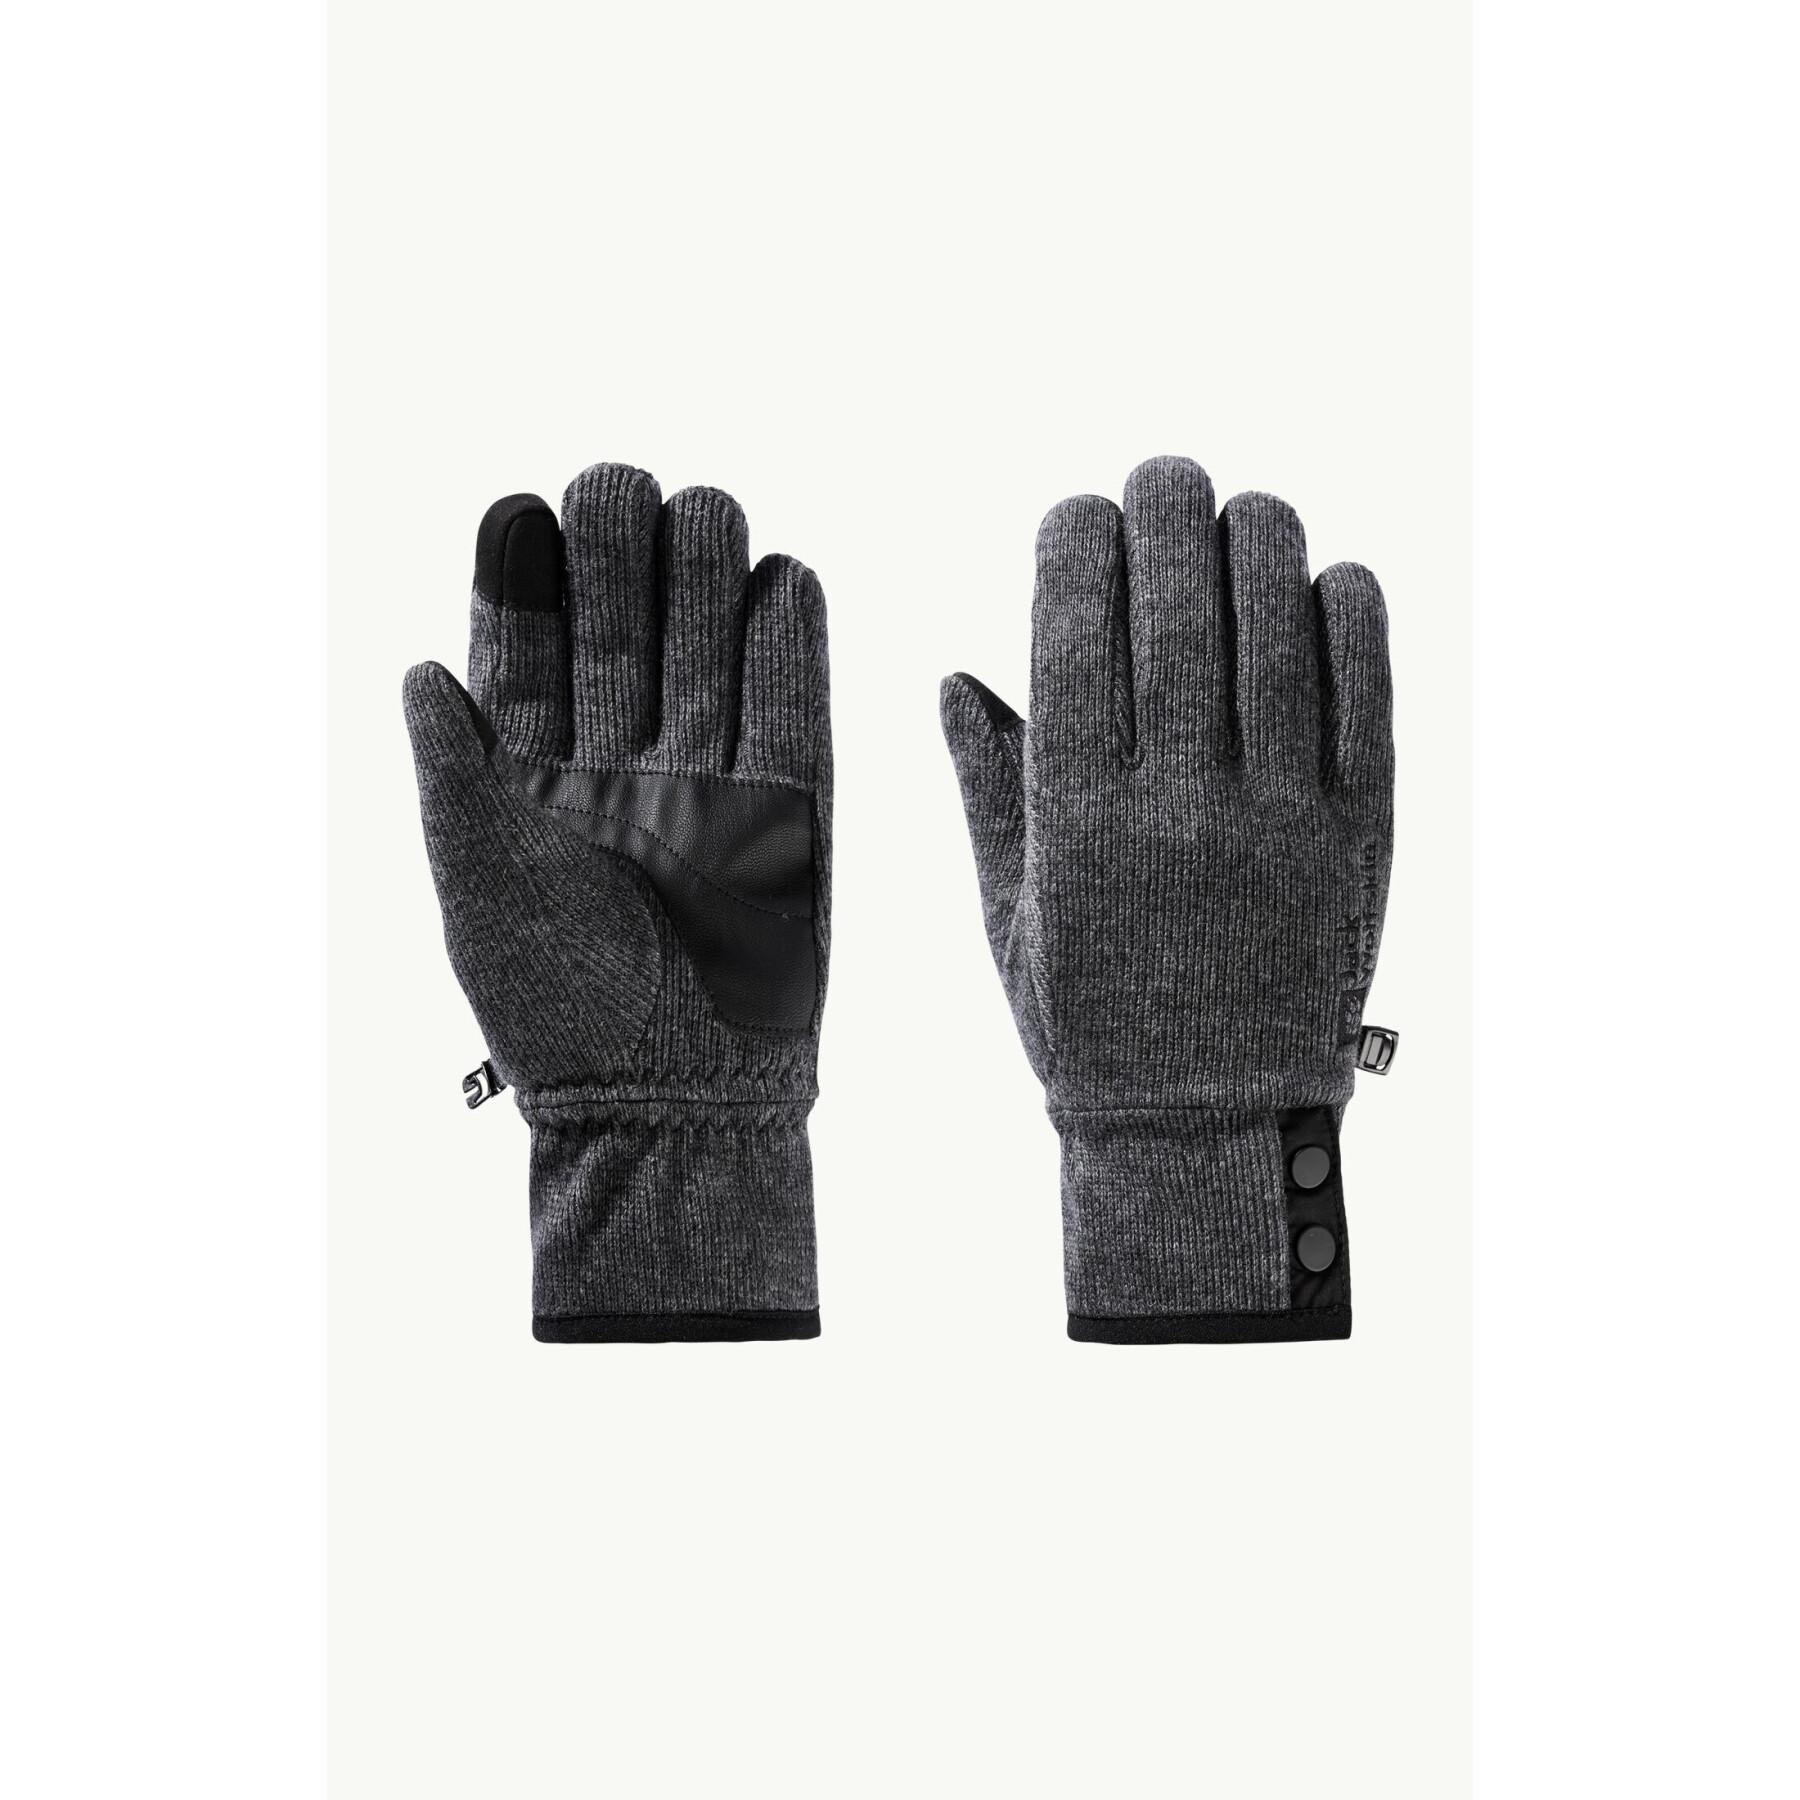 - winter - Wolfskin gloves Accessories - Fitness Wool Training Fitness Jack